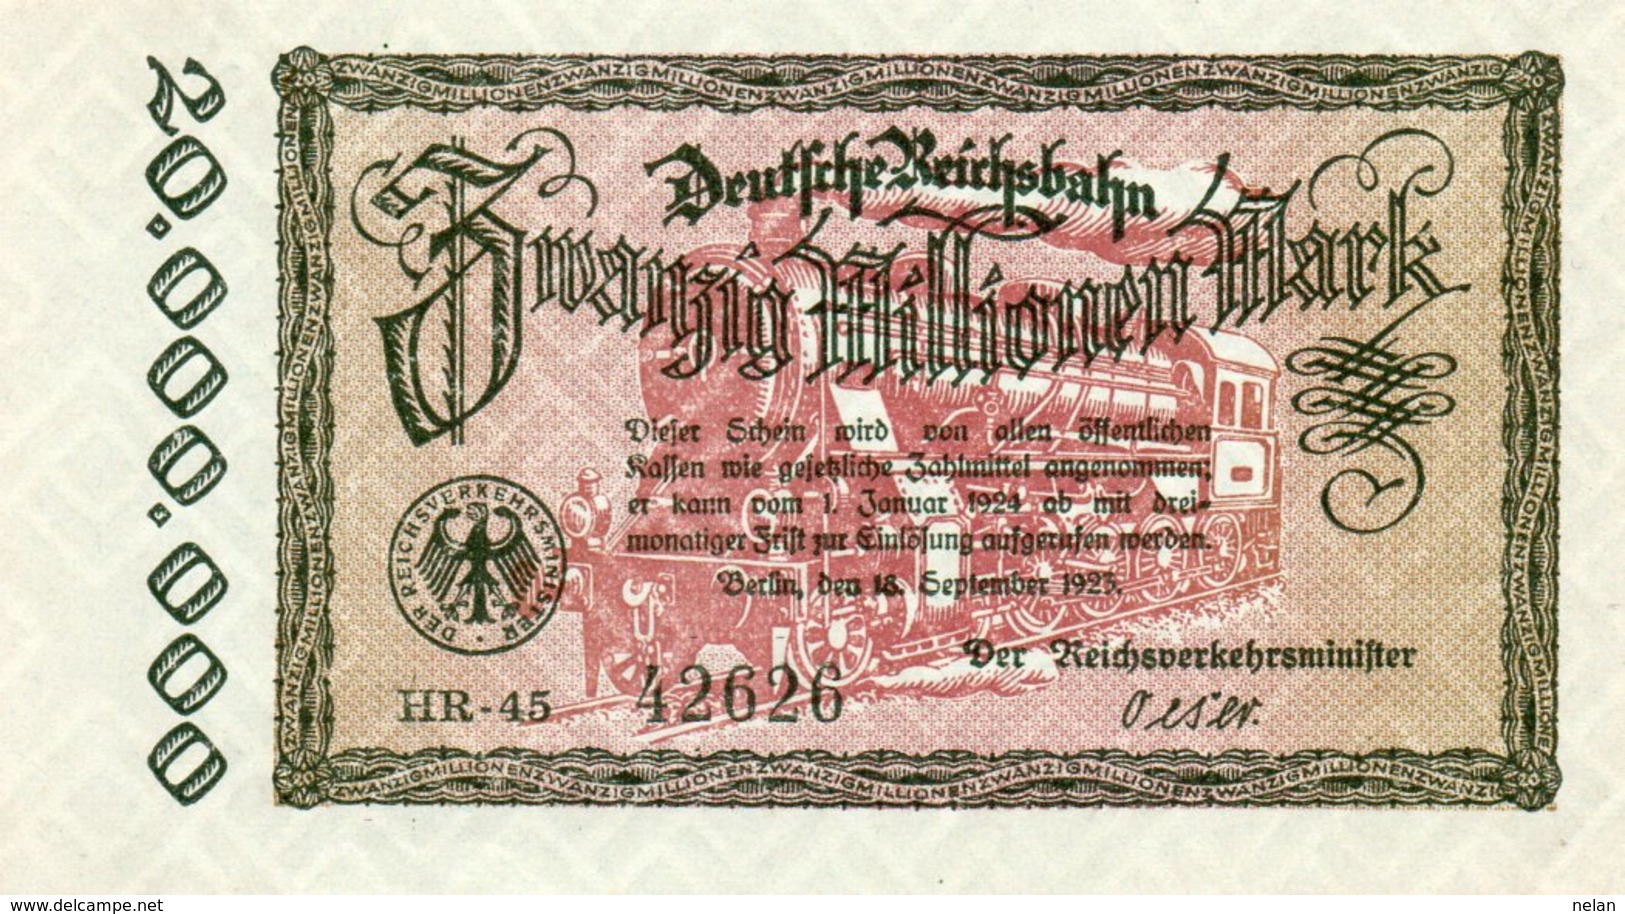 GERMANY-20 MILLIONEN MARK 1923  P-S1015.3  UNC  UNIFACE  SERIE HR-45  42626 - 20 Miljoen Mark